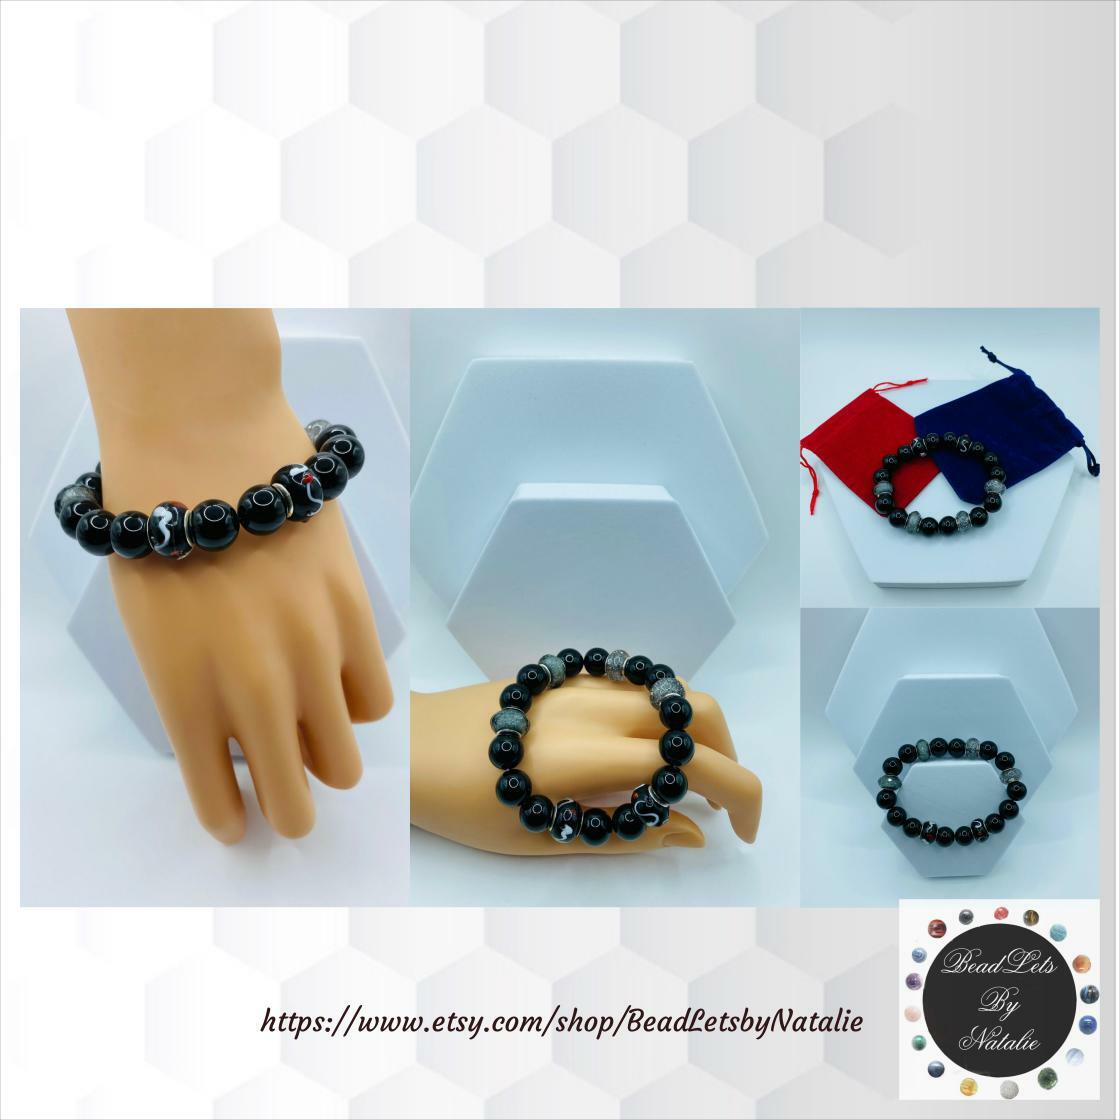 Just in! This unique ONYX Bracelet, Black Bracelet, Black Onyx, Black Onyx Stone, MENS Black Bracelet, Bracelets for WOMEN, Couples Bracelet for $23.95. 
etsy.com/listing/116592…
#BlackBracelet #OnyxBracelet